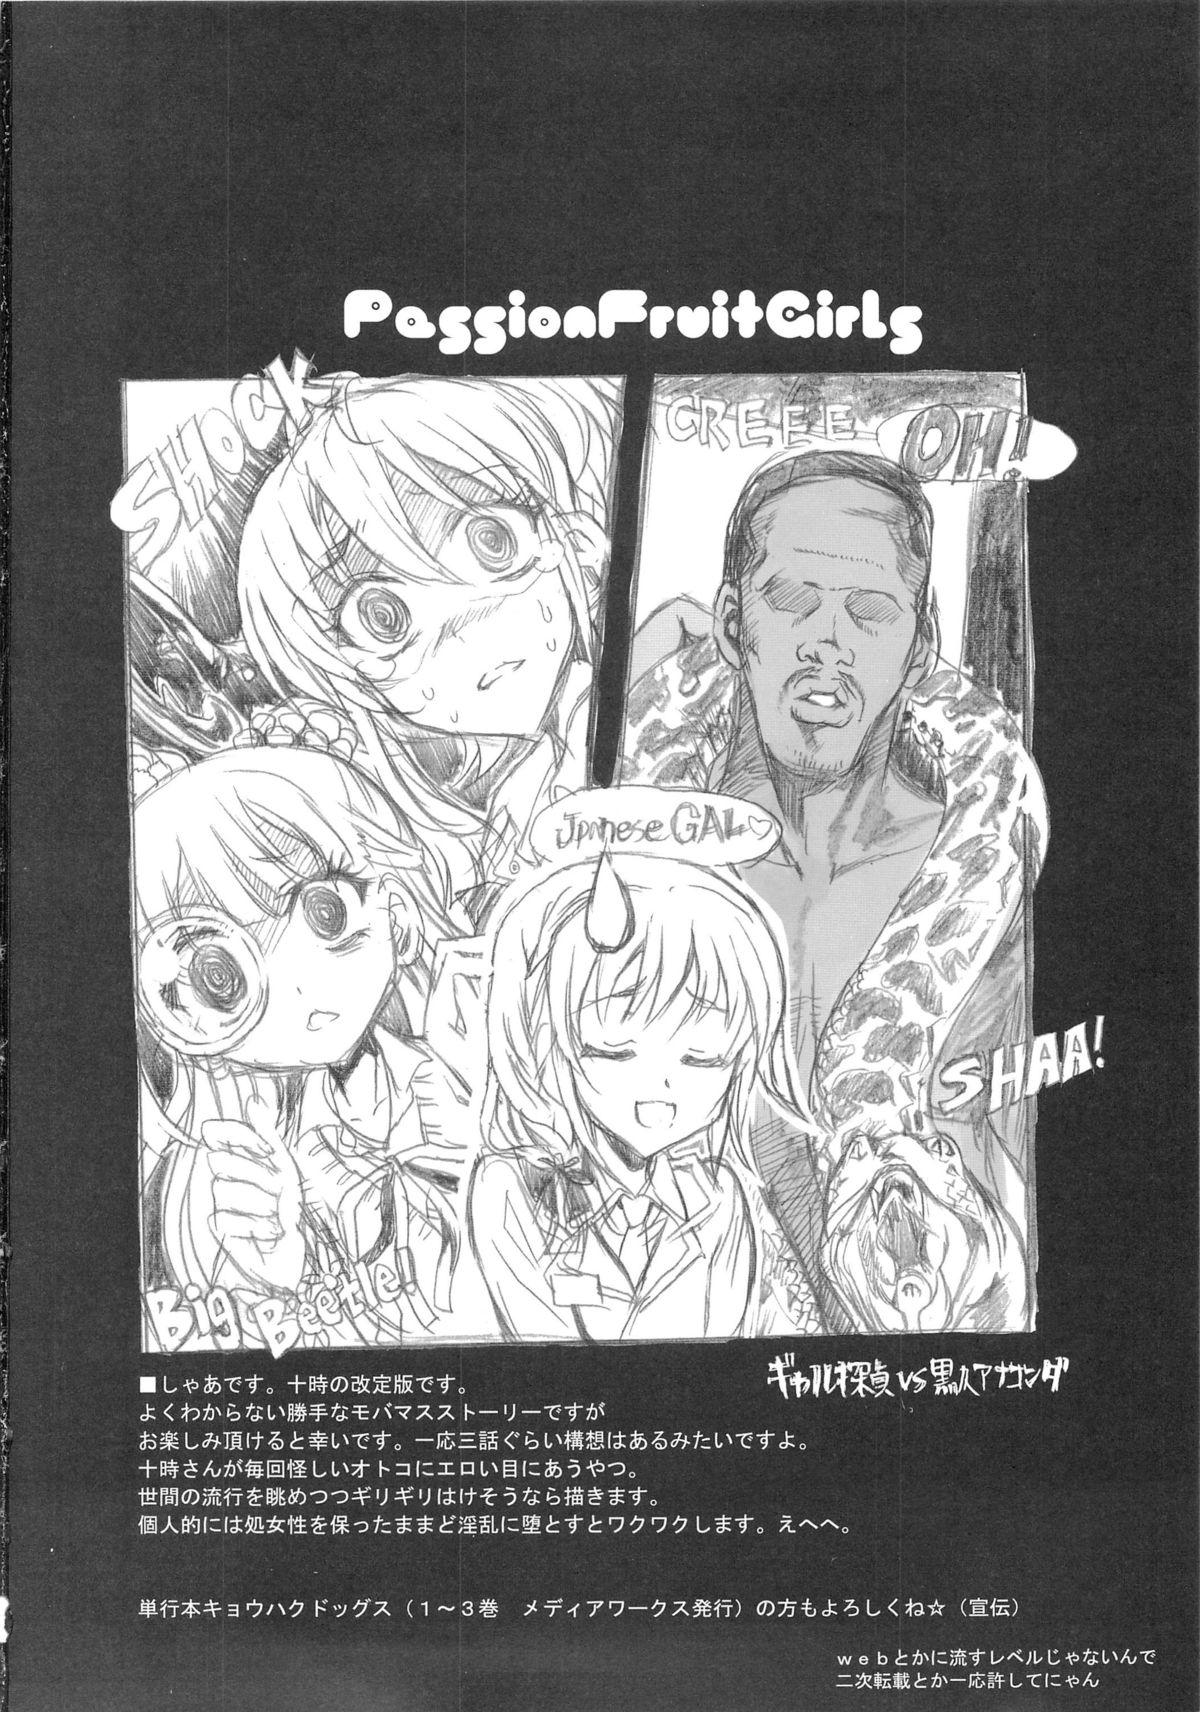 PASSION FRUITS GIRLS #1 "Totoki Airi" 32